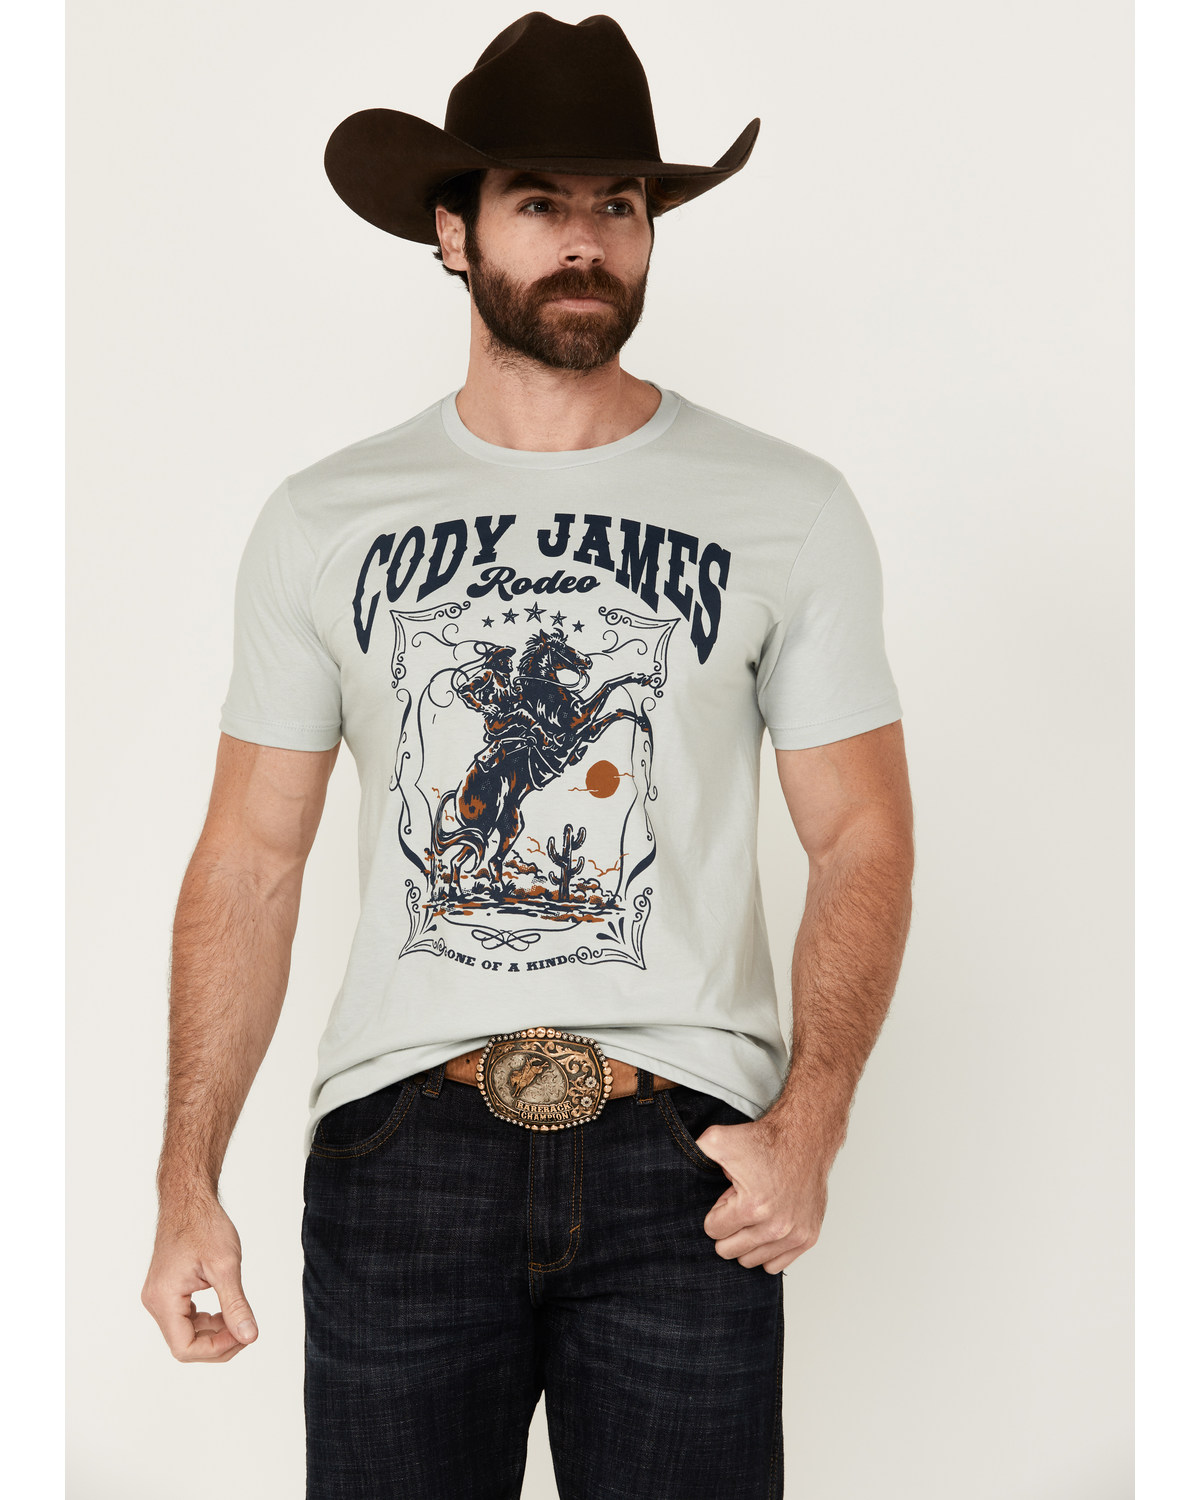 Cody James Men's Rodeo Rider Short Sleeve Graphic T-Shirt